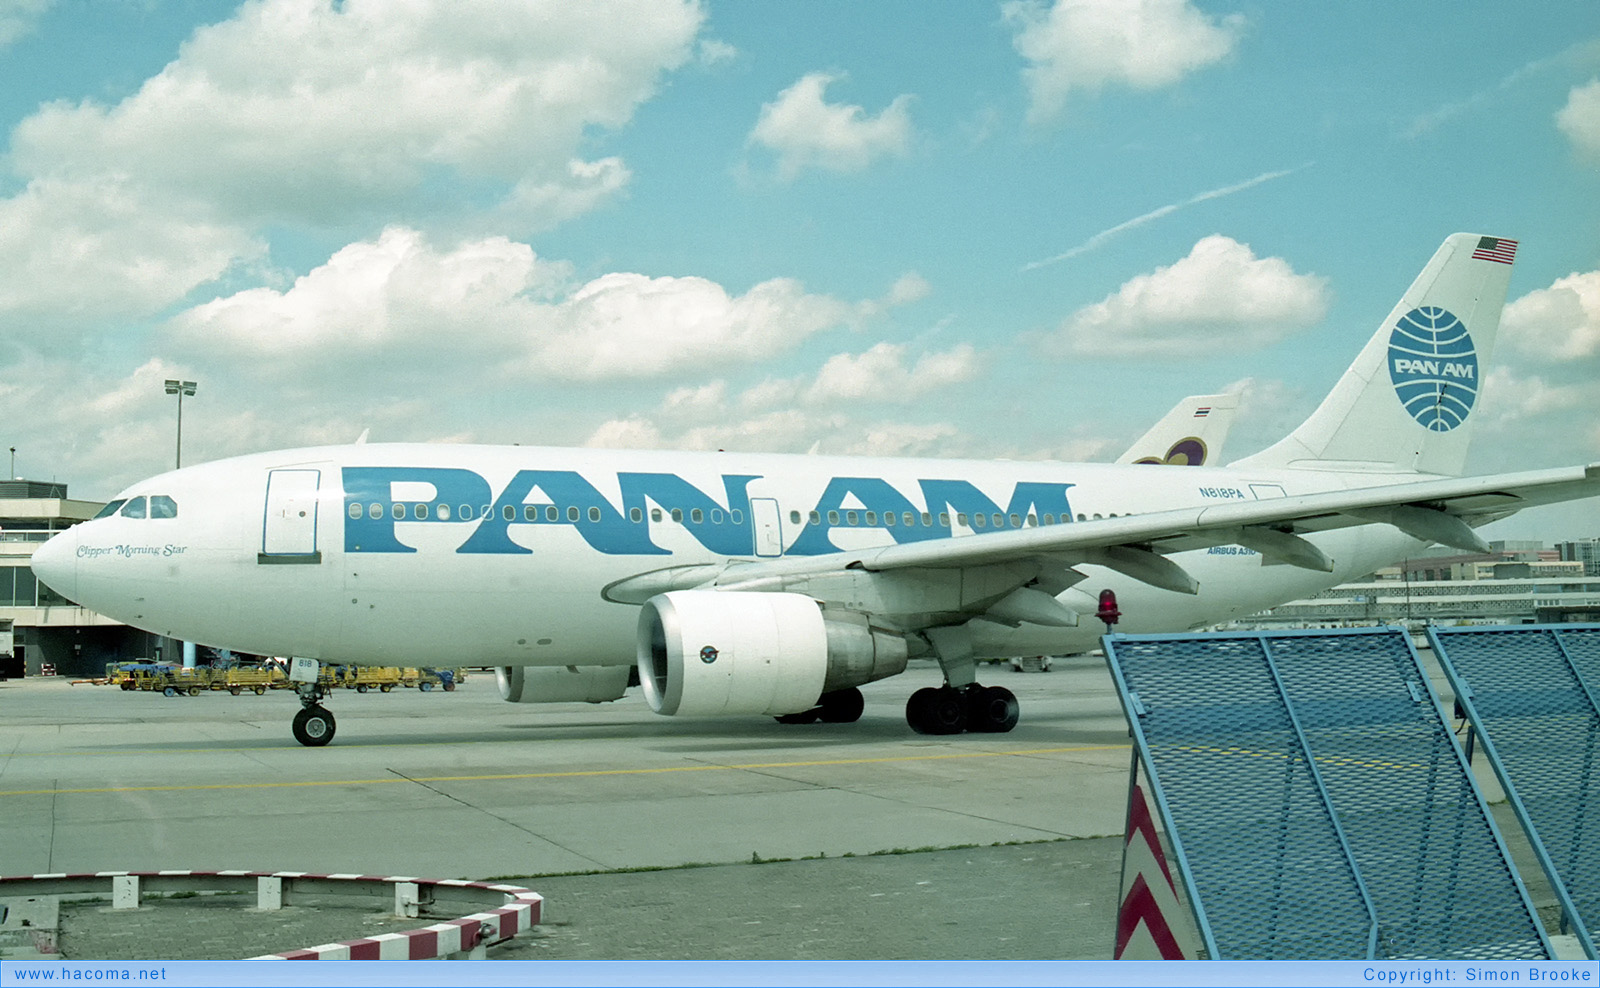 Foto von N818PA - Pan Am Clipper Morning Star - Flughafen Frankfurt am Main - 23.06.1991